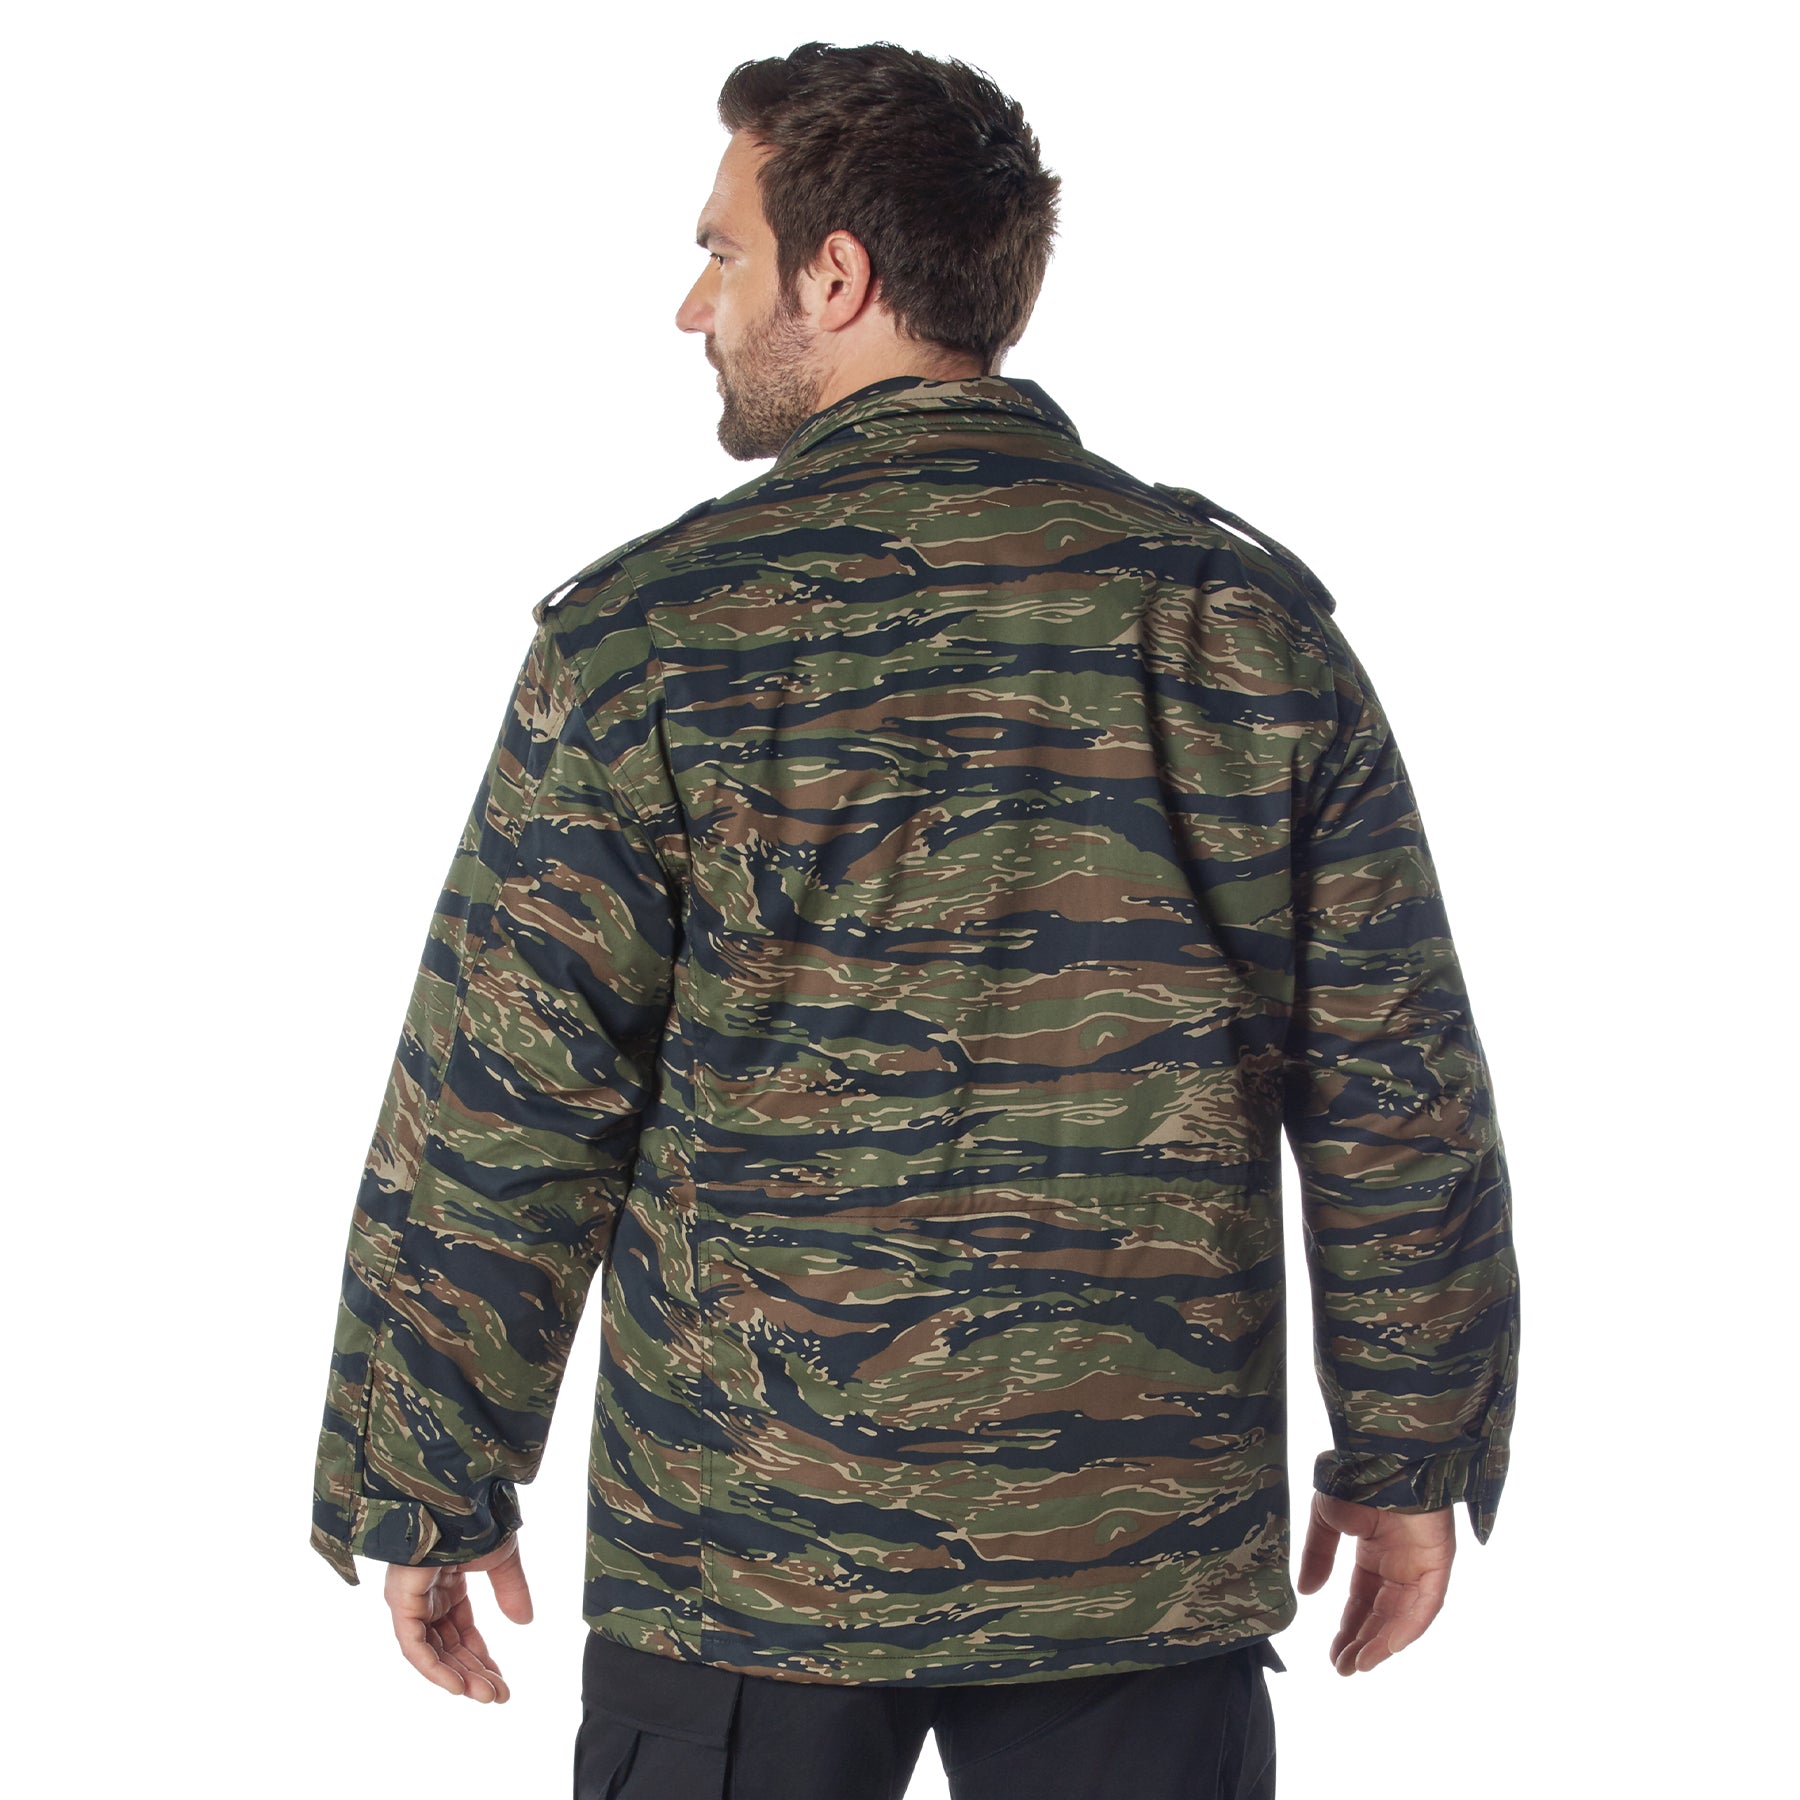 Camo Poly/Cotton M-65 Field Jackets